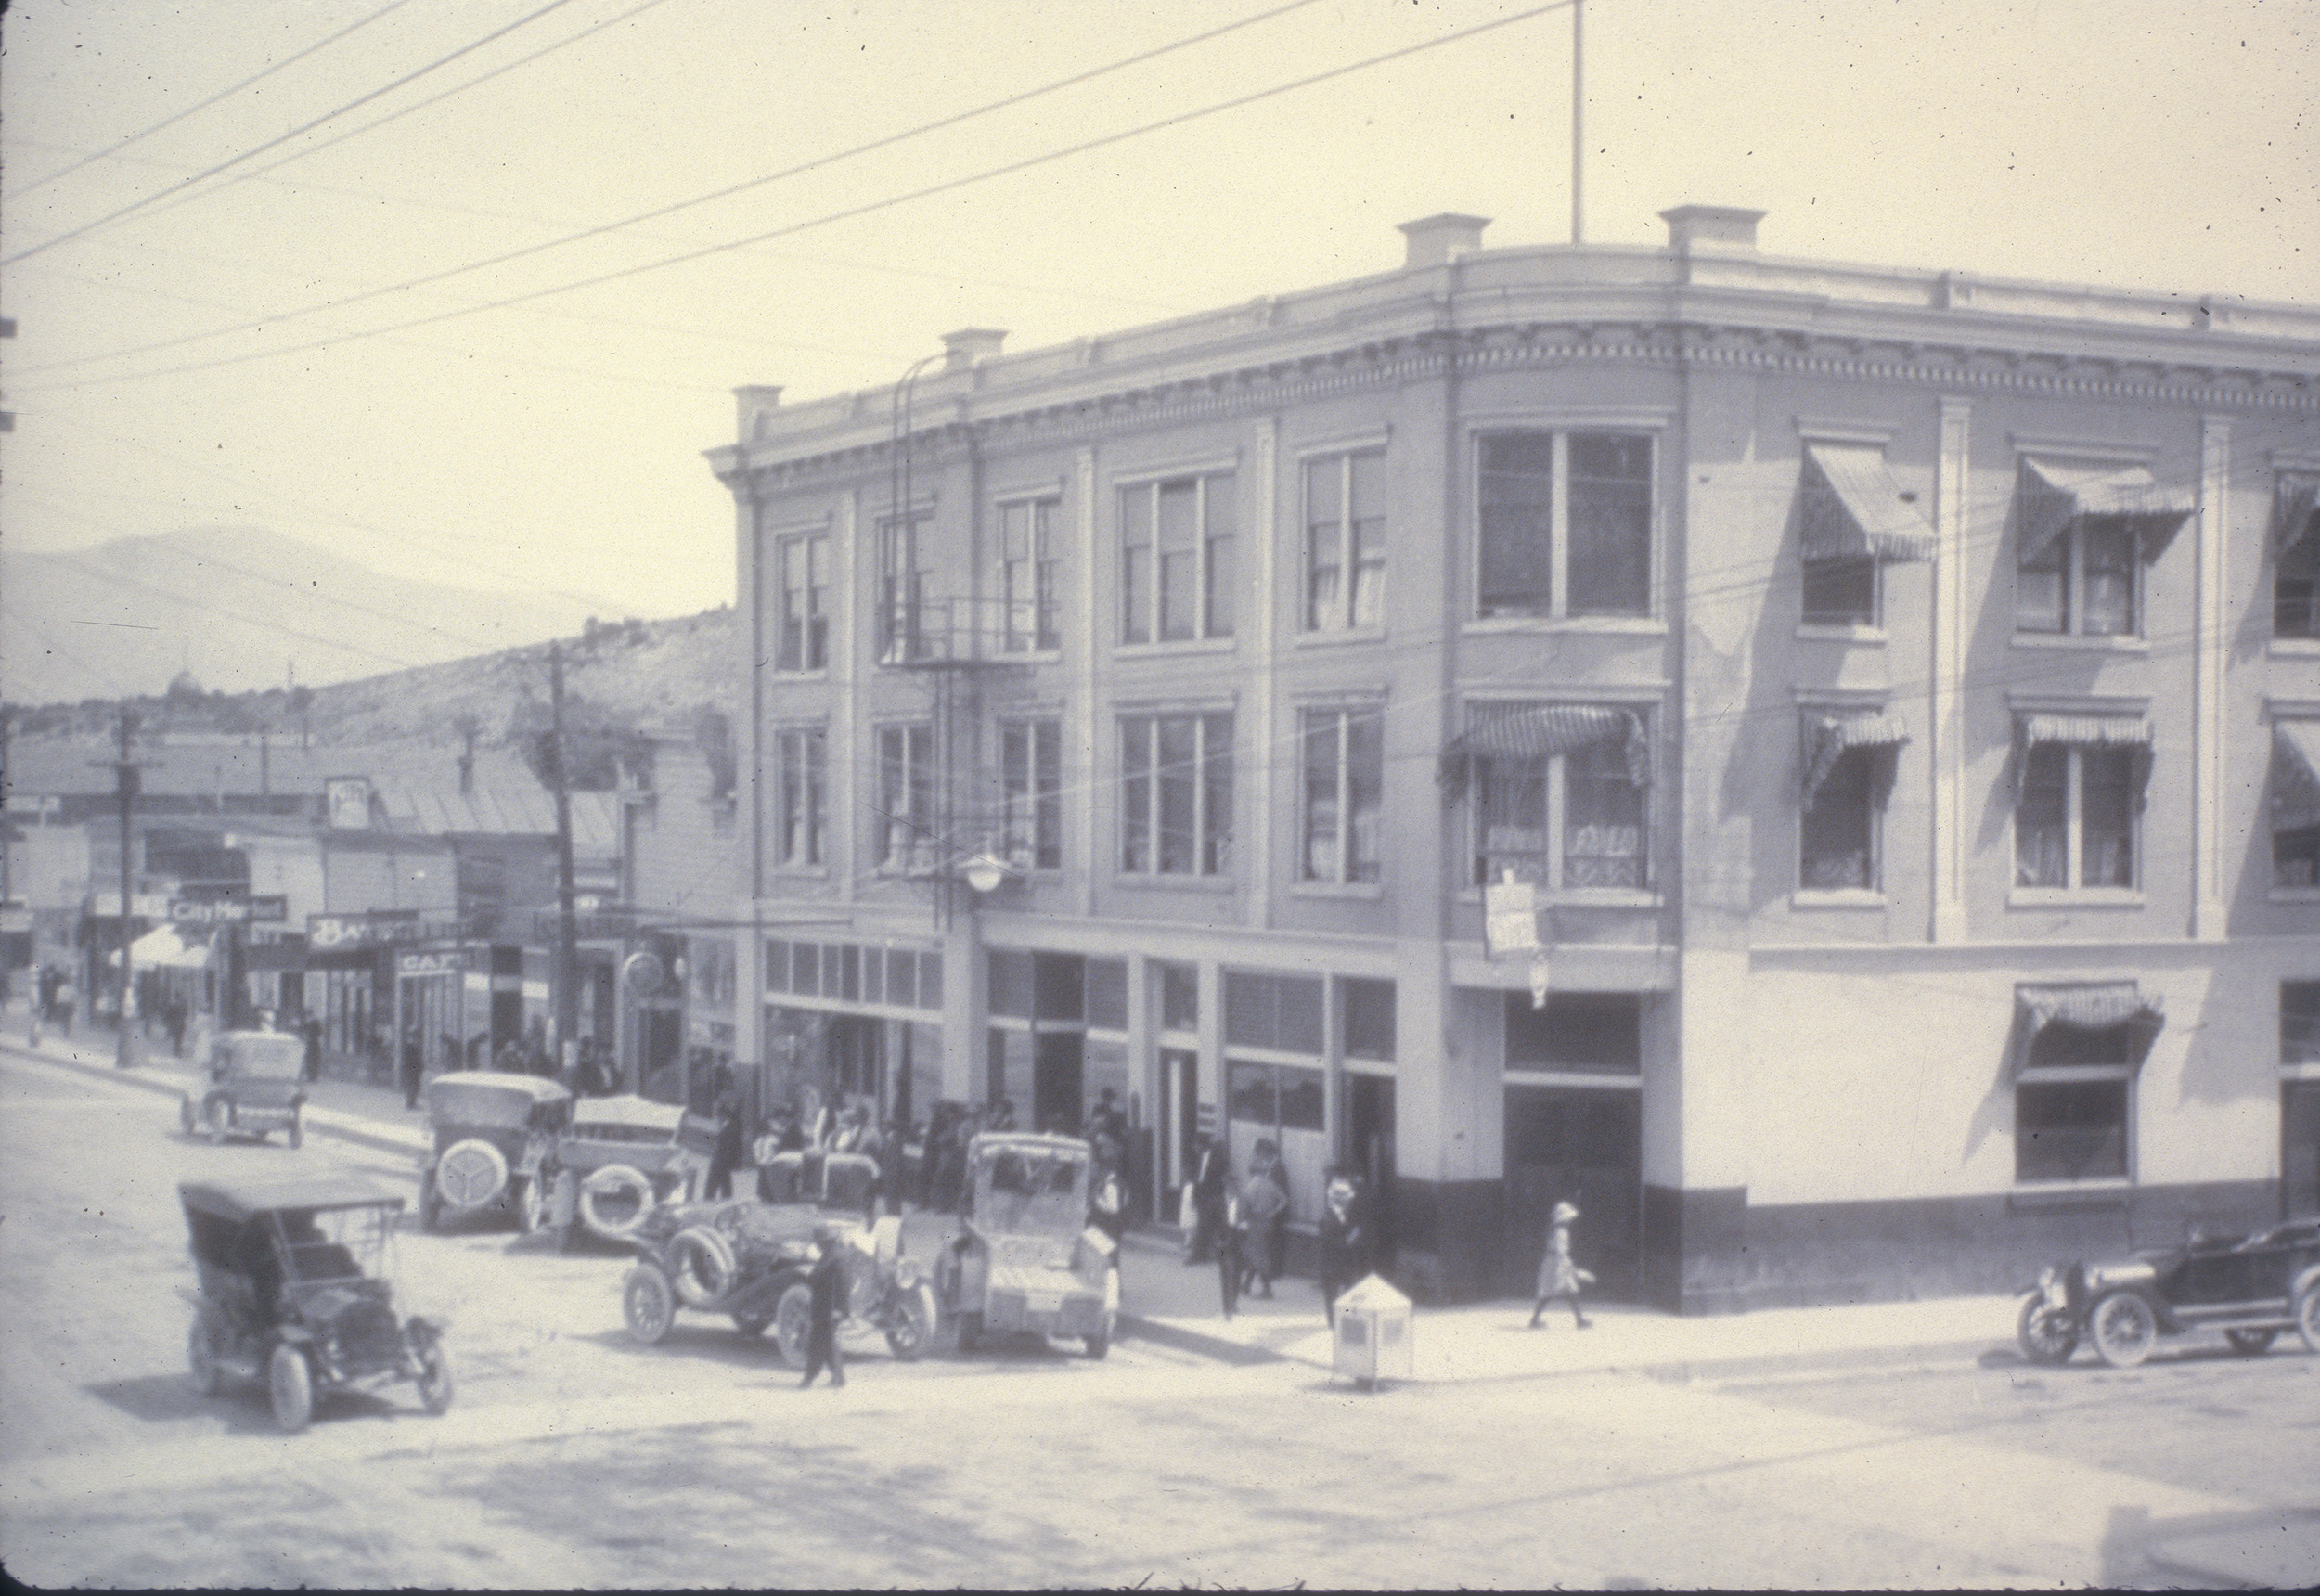 Slide of Main Street, Ely, Nevada, circa 1920s